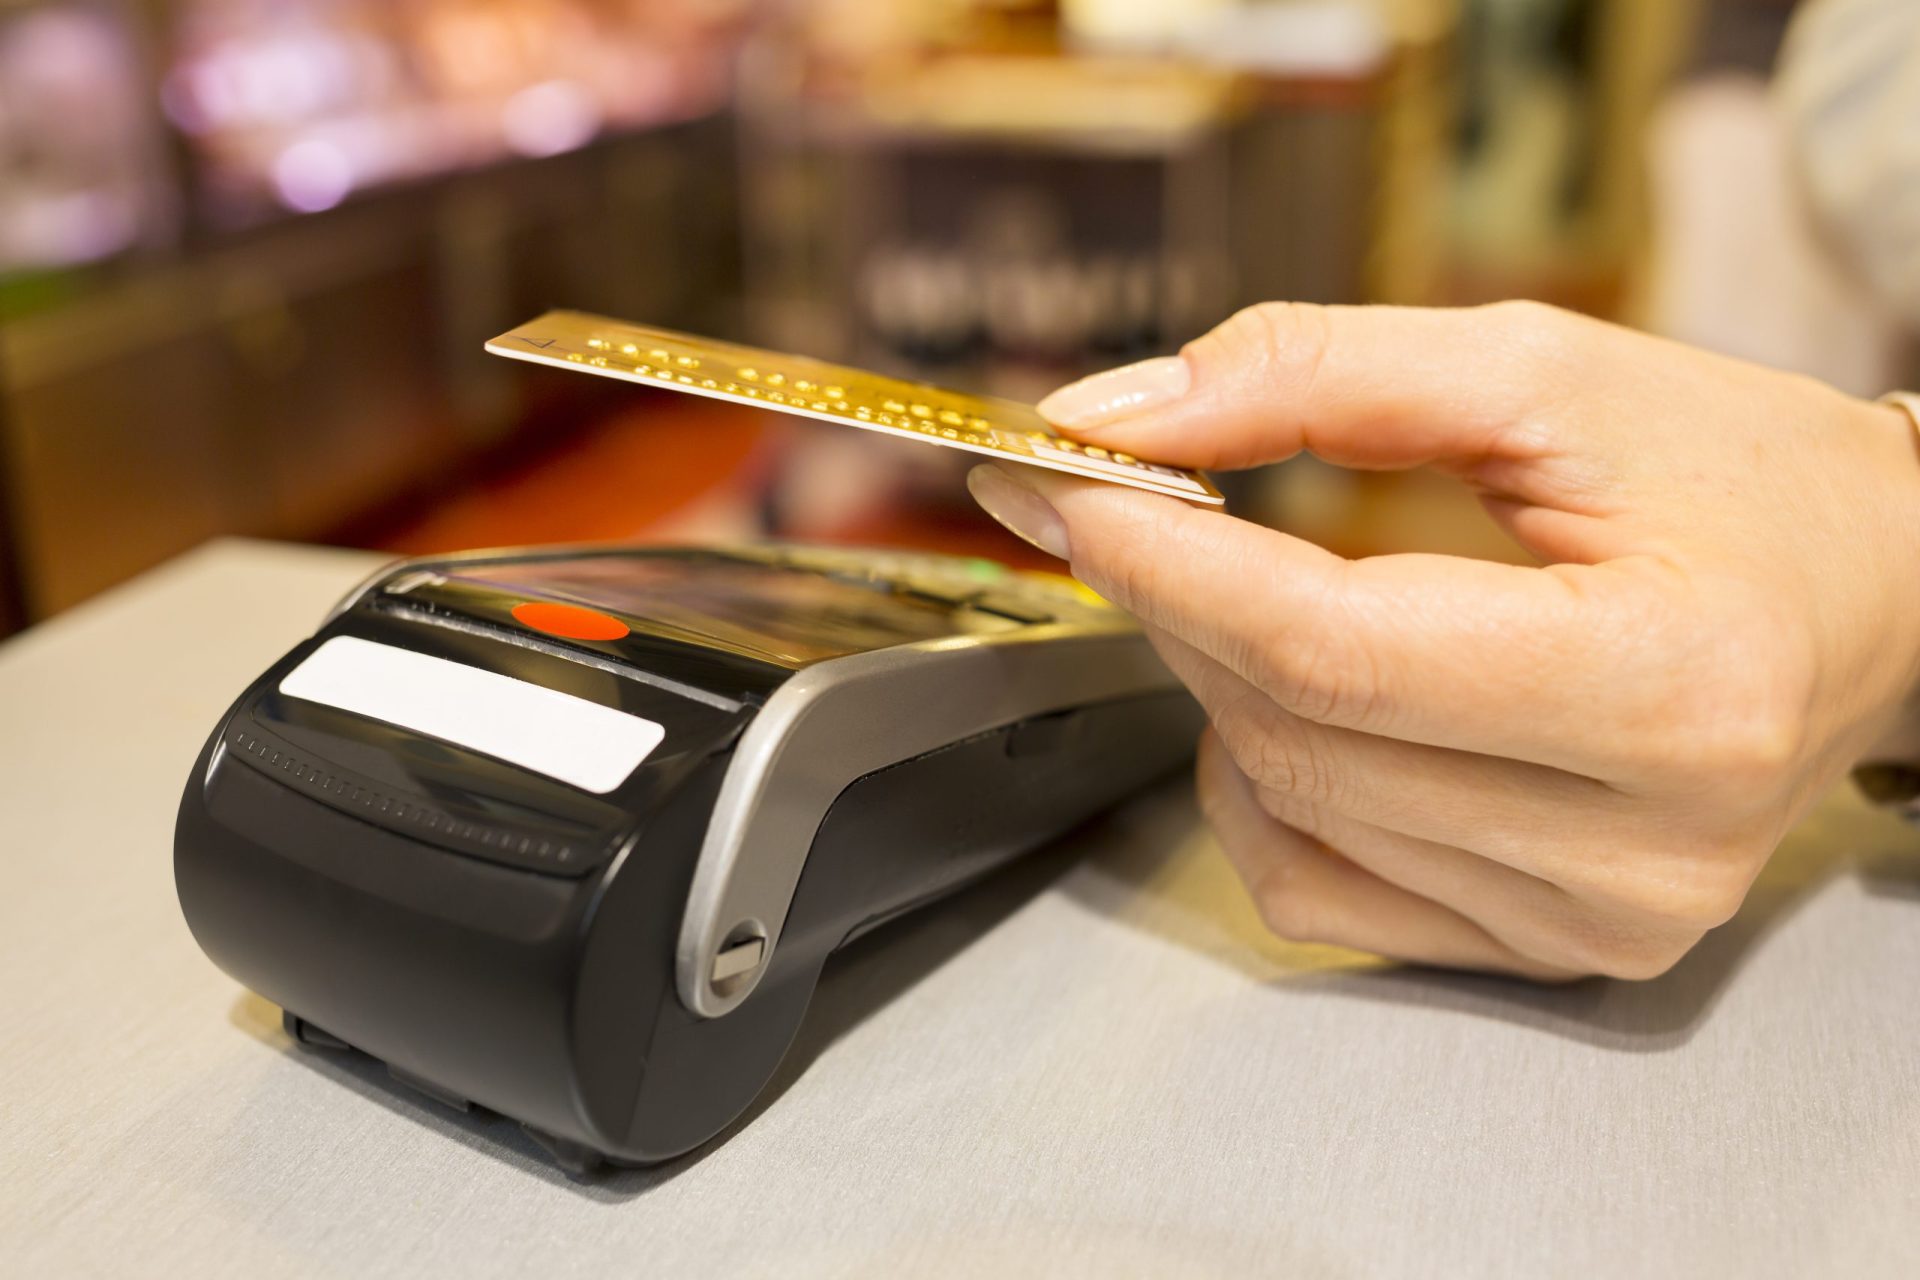 Deco esclarece dúvidas sobre o cartão de crédito ‘contactless’